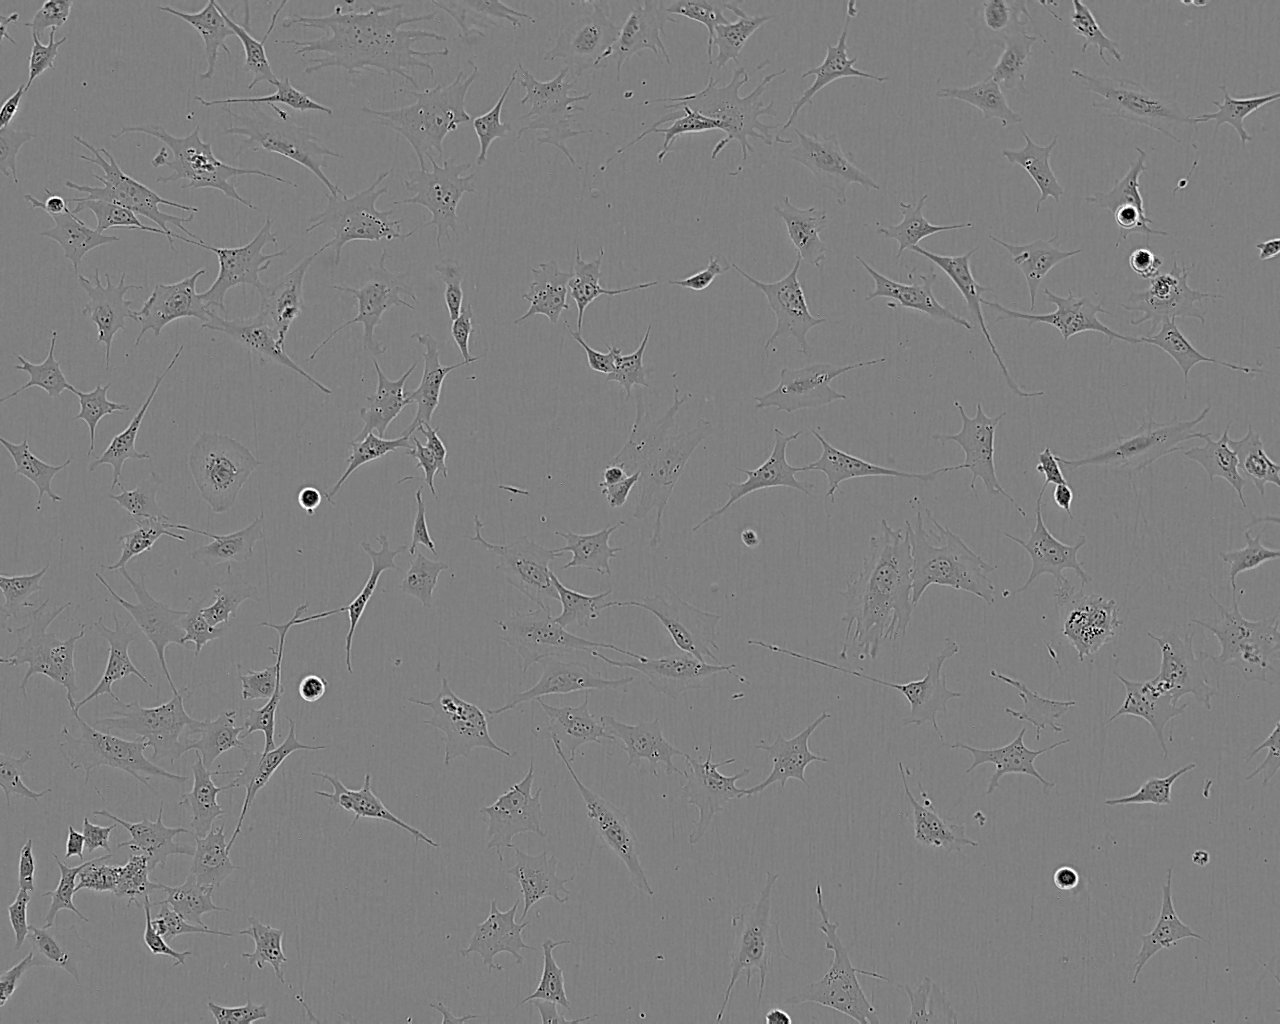 CHO-K1 cell line中国仓鼠卵巢细胞系